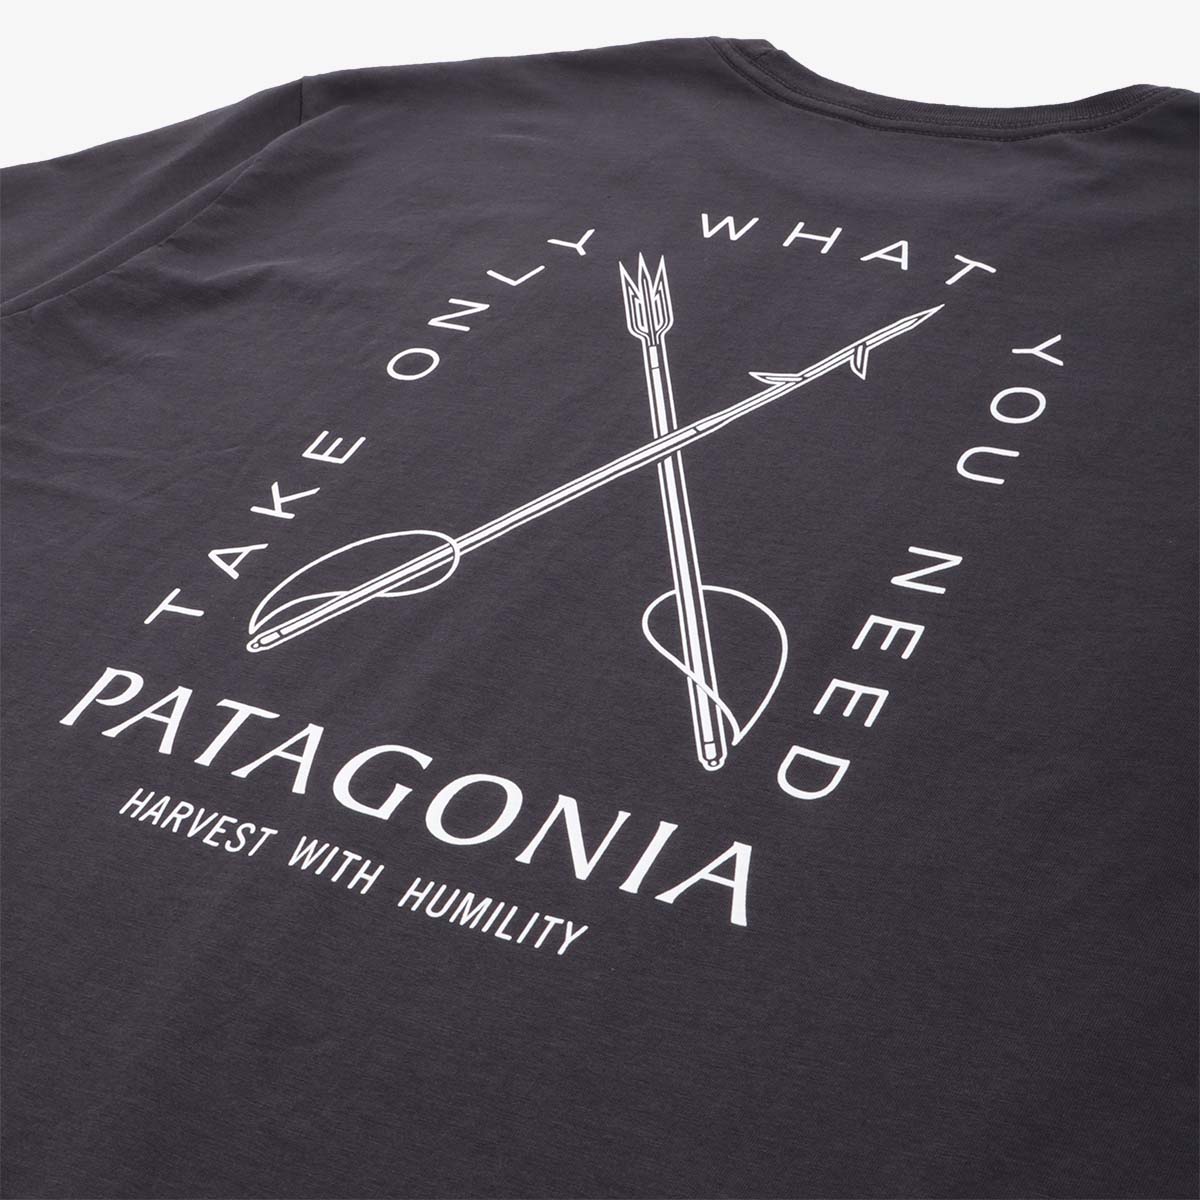 Patagonia CTA Organic T-Shirt, Humble Harvest: Ink Black, Detail Shot 2